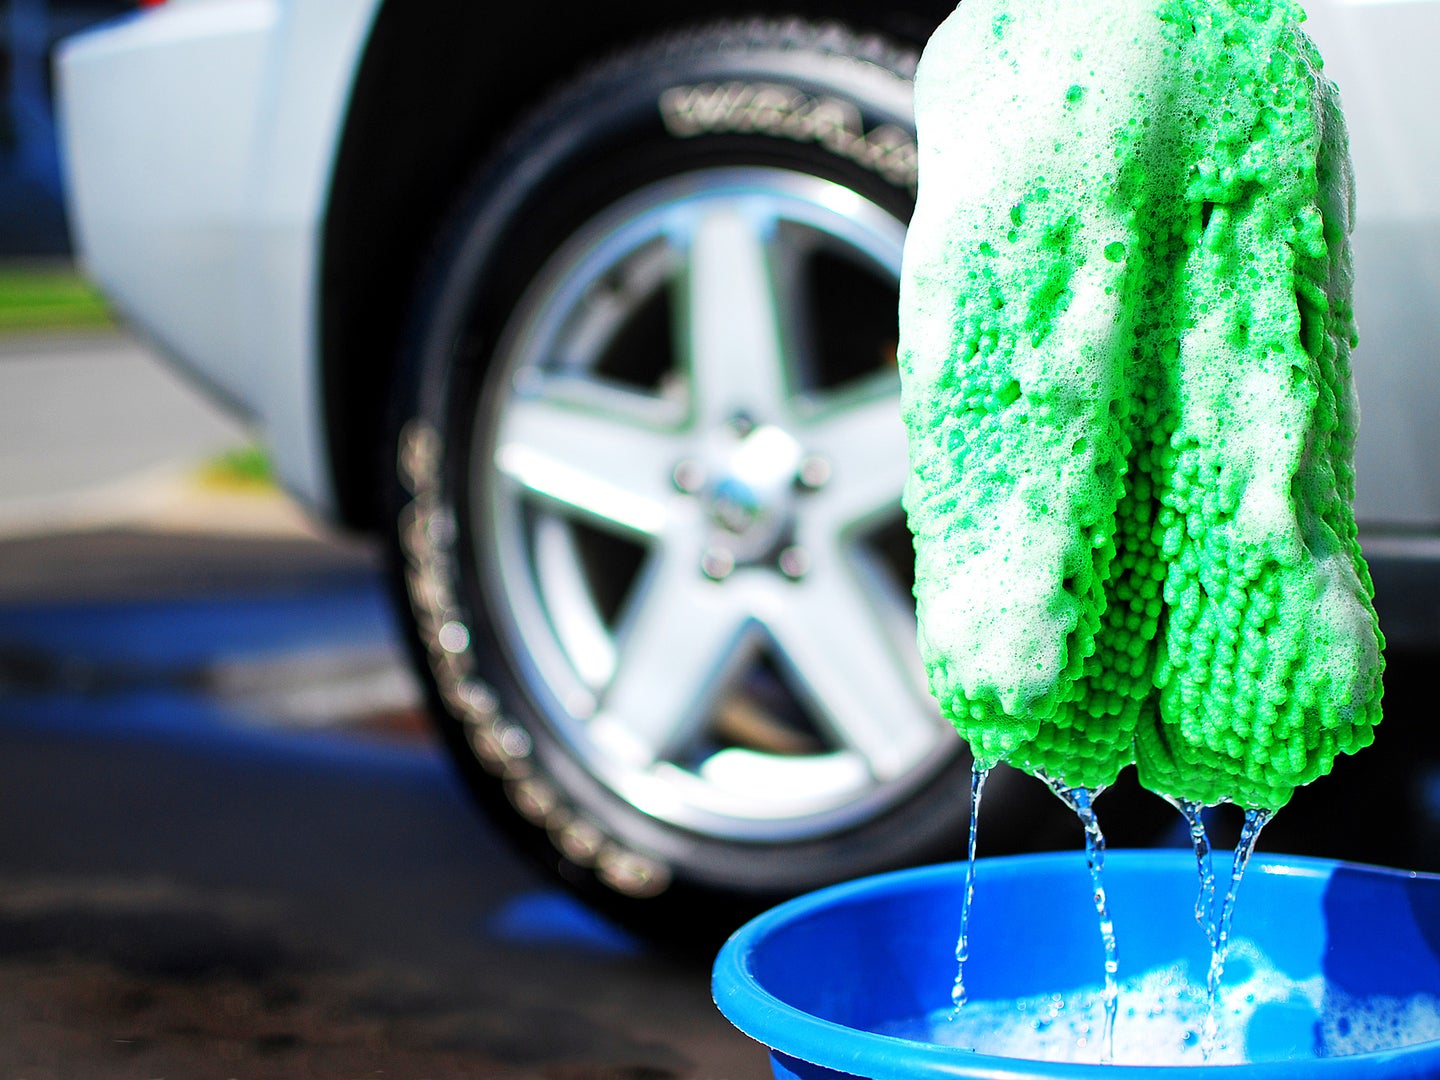 washing the car